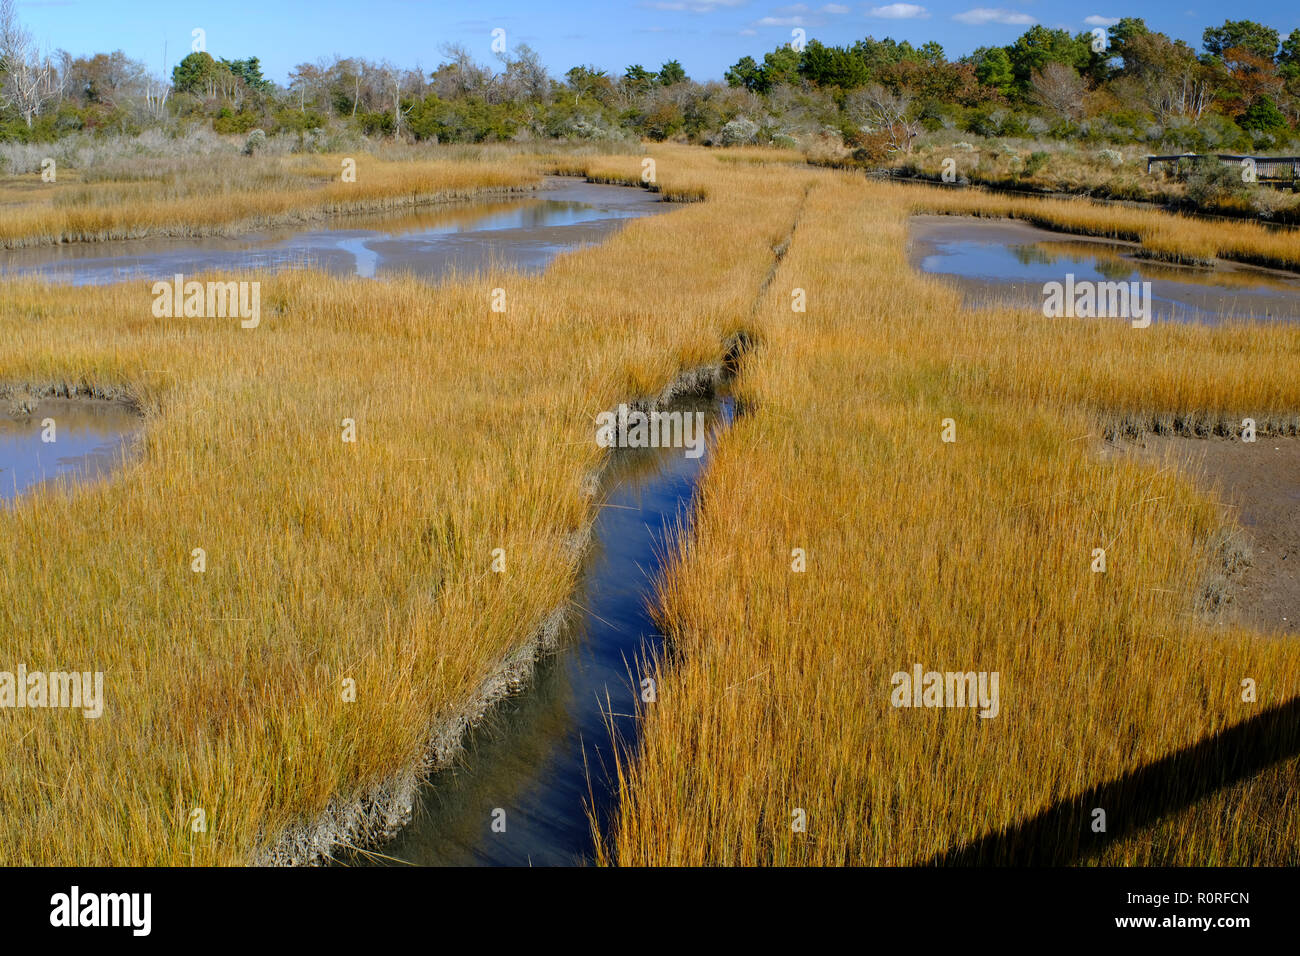 The salt marsh in Assateague Island National Seashore Park Stock Photo